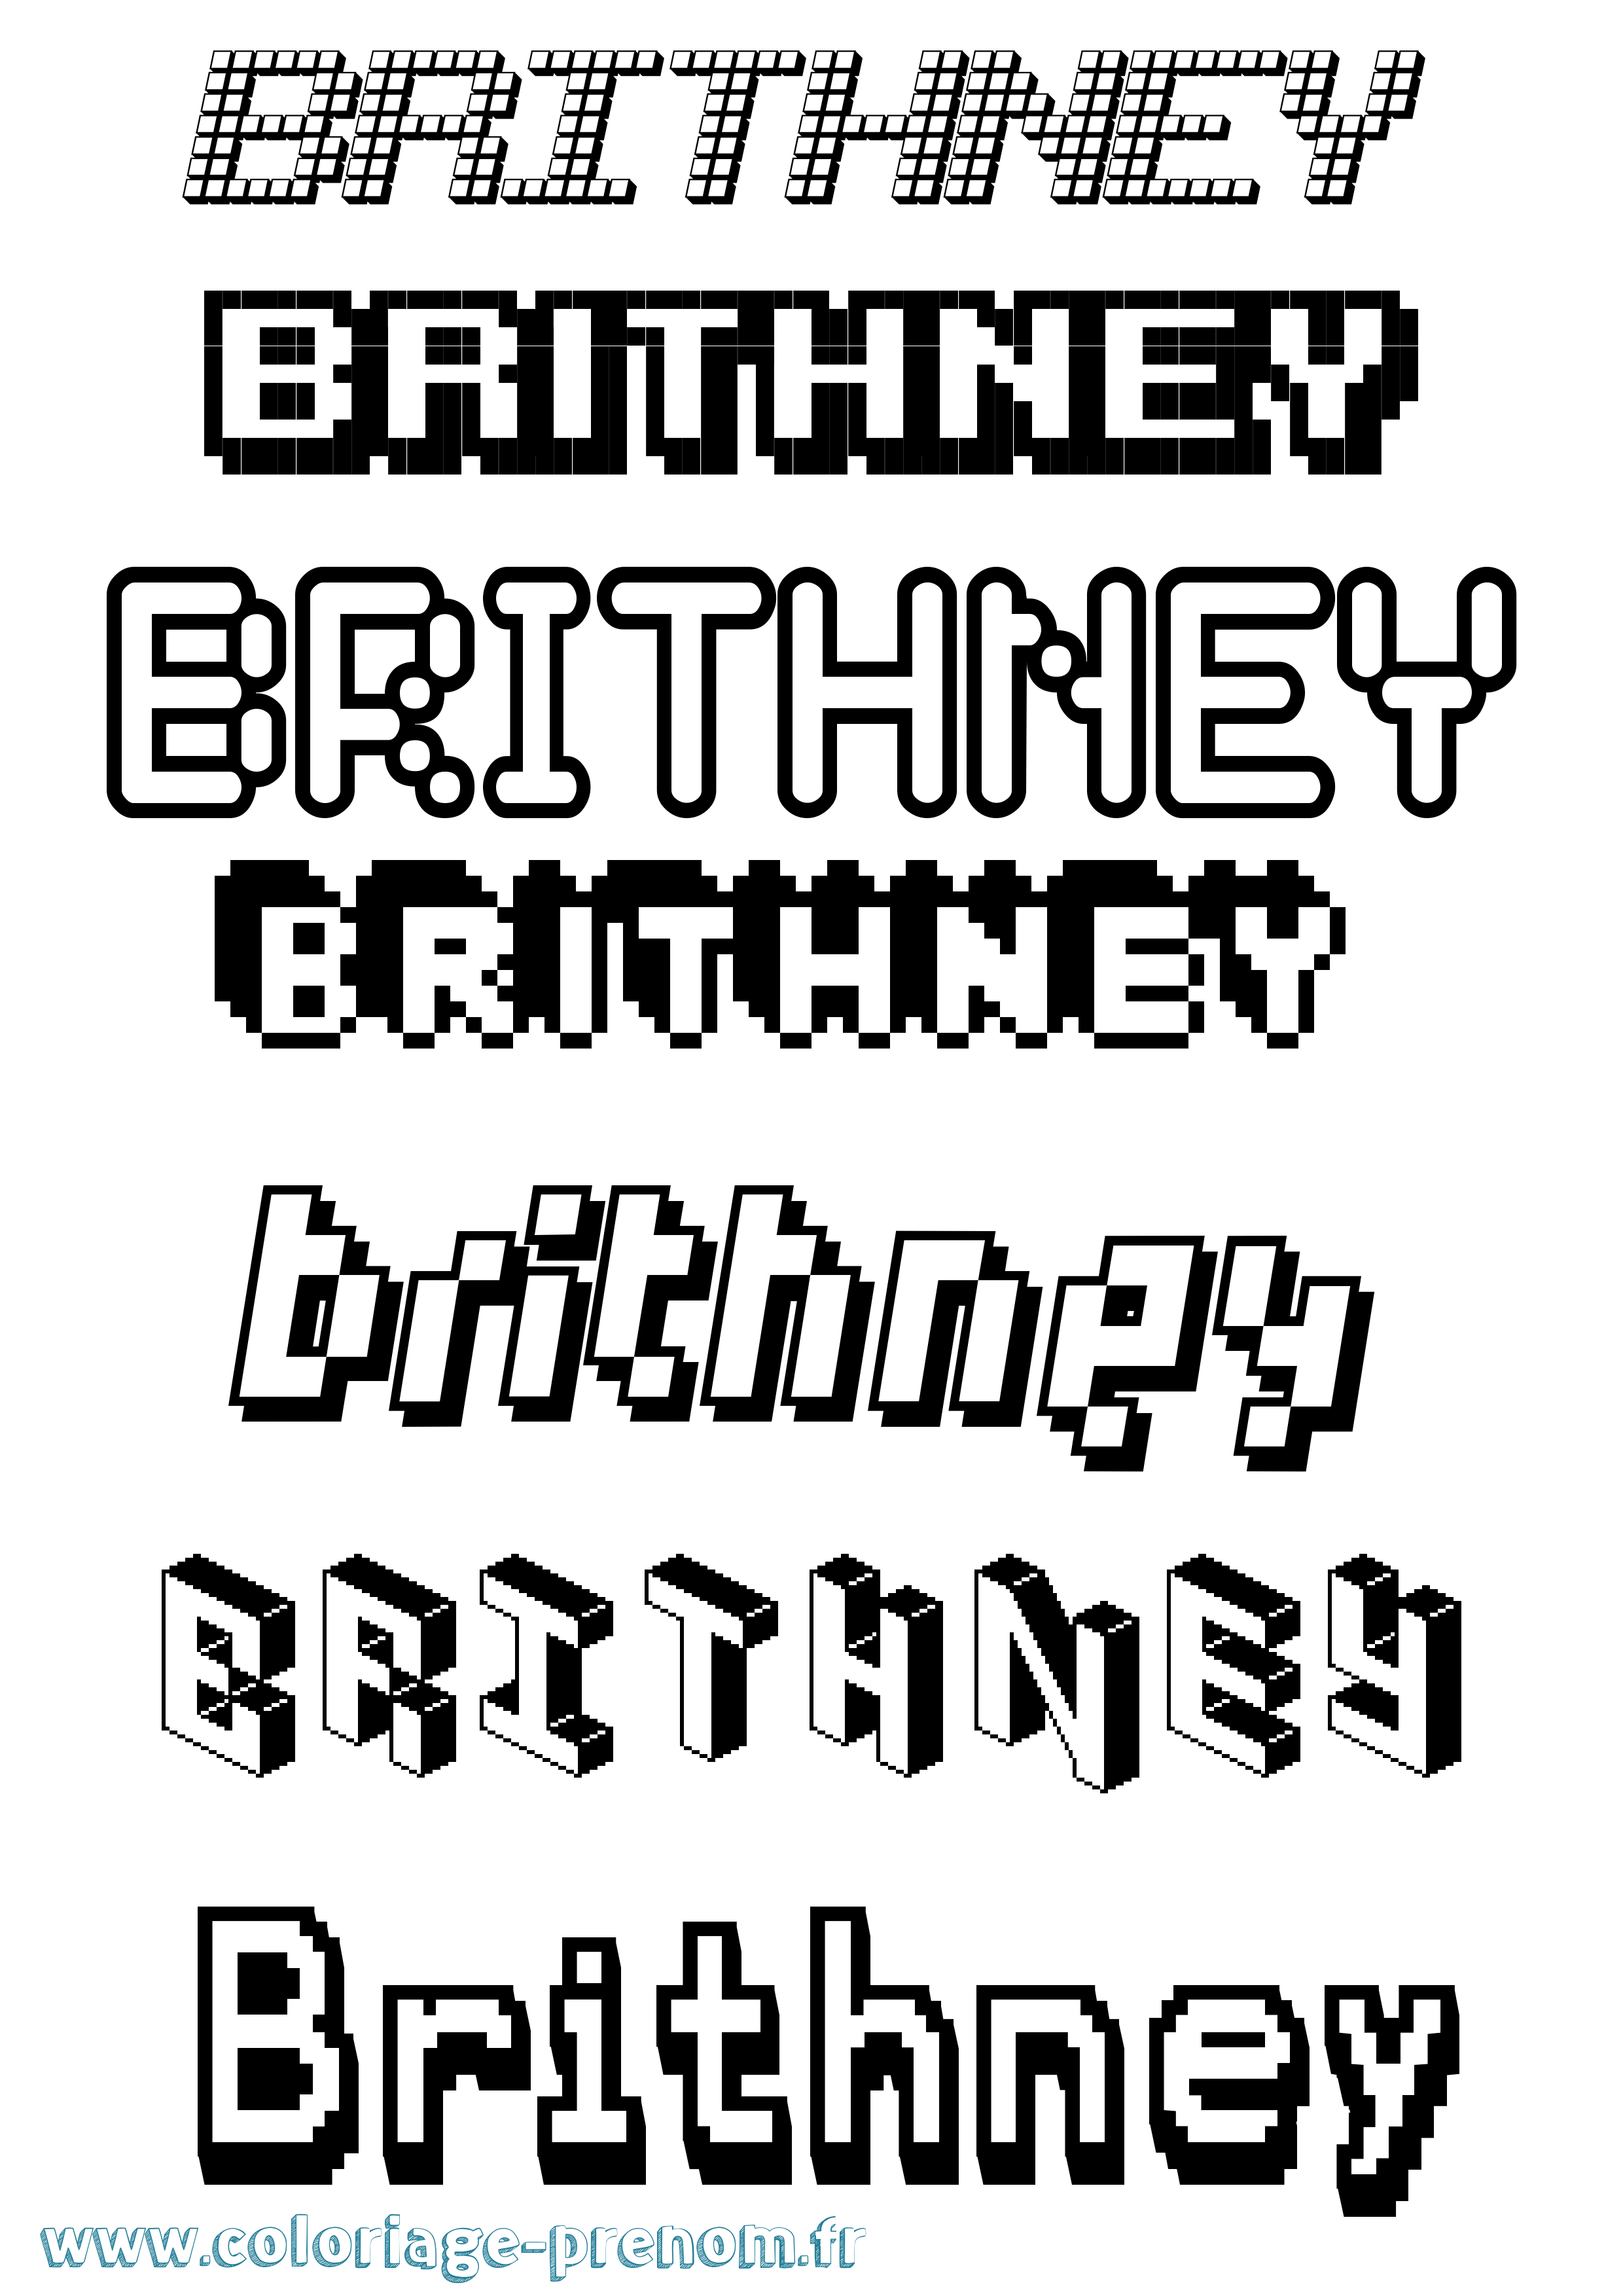 Coloriage prénom Brithney Pixel